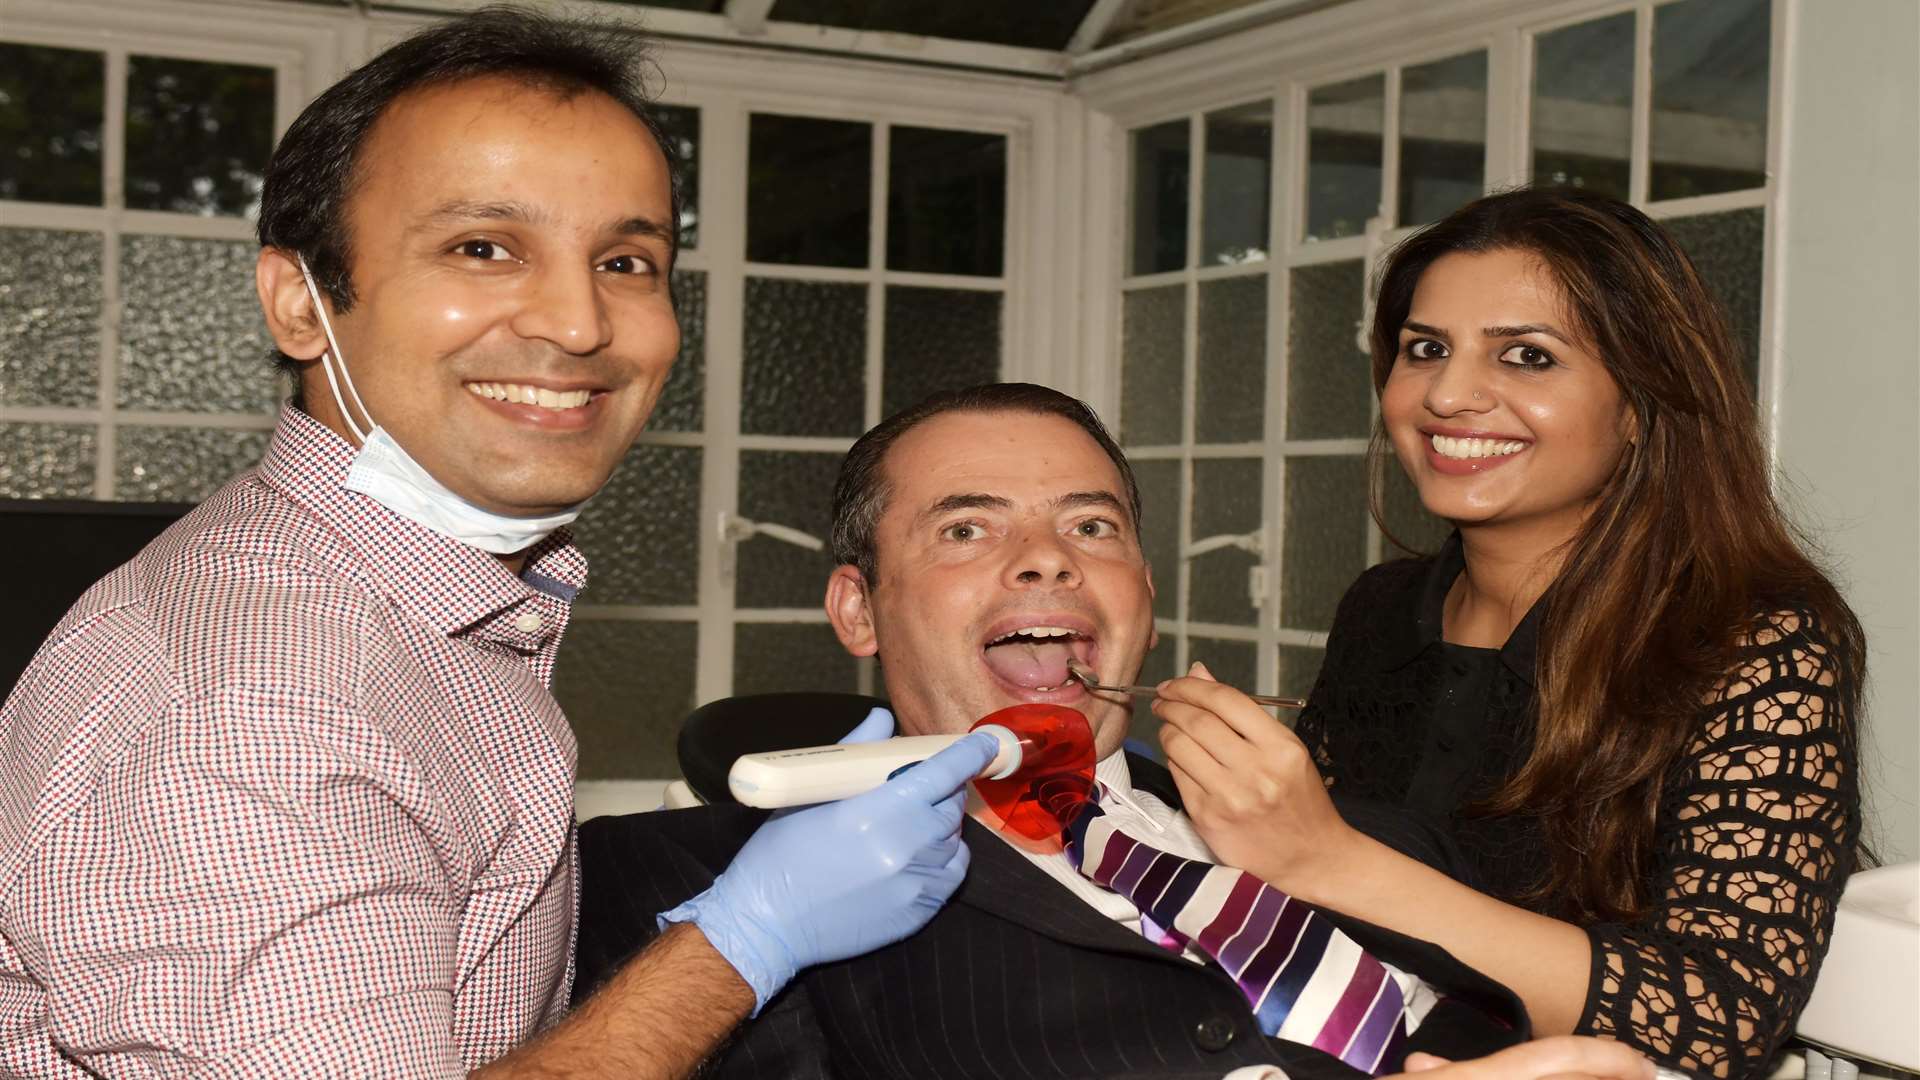 From left, Dr Balal Afzal of Park Road Dental, Paul Barnes of Royal Bank of Scotland and Sarah Nazir of Park Road Dental